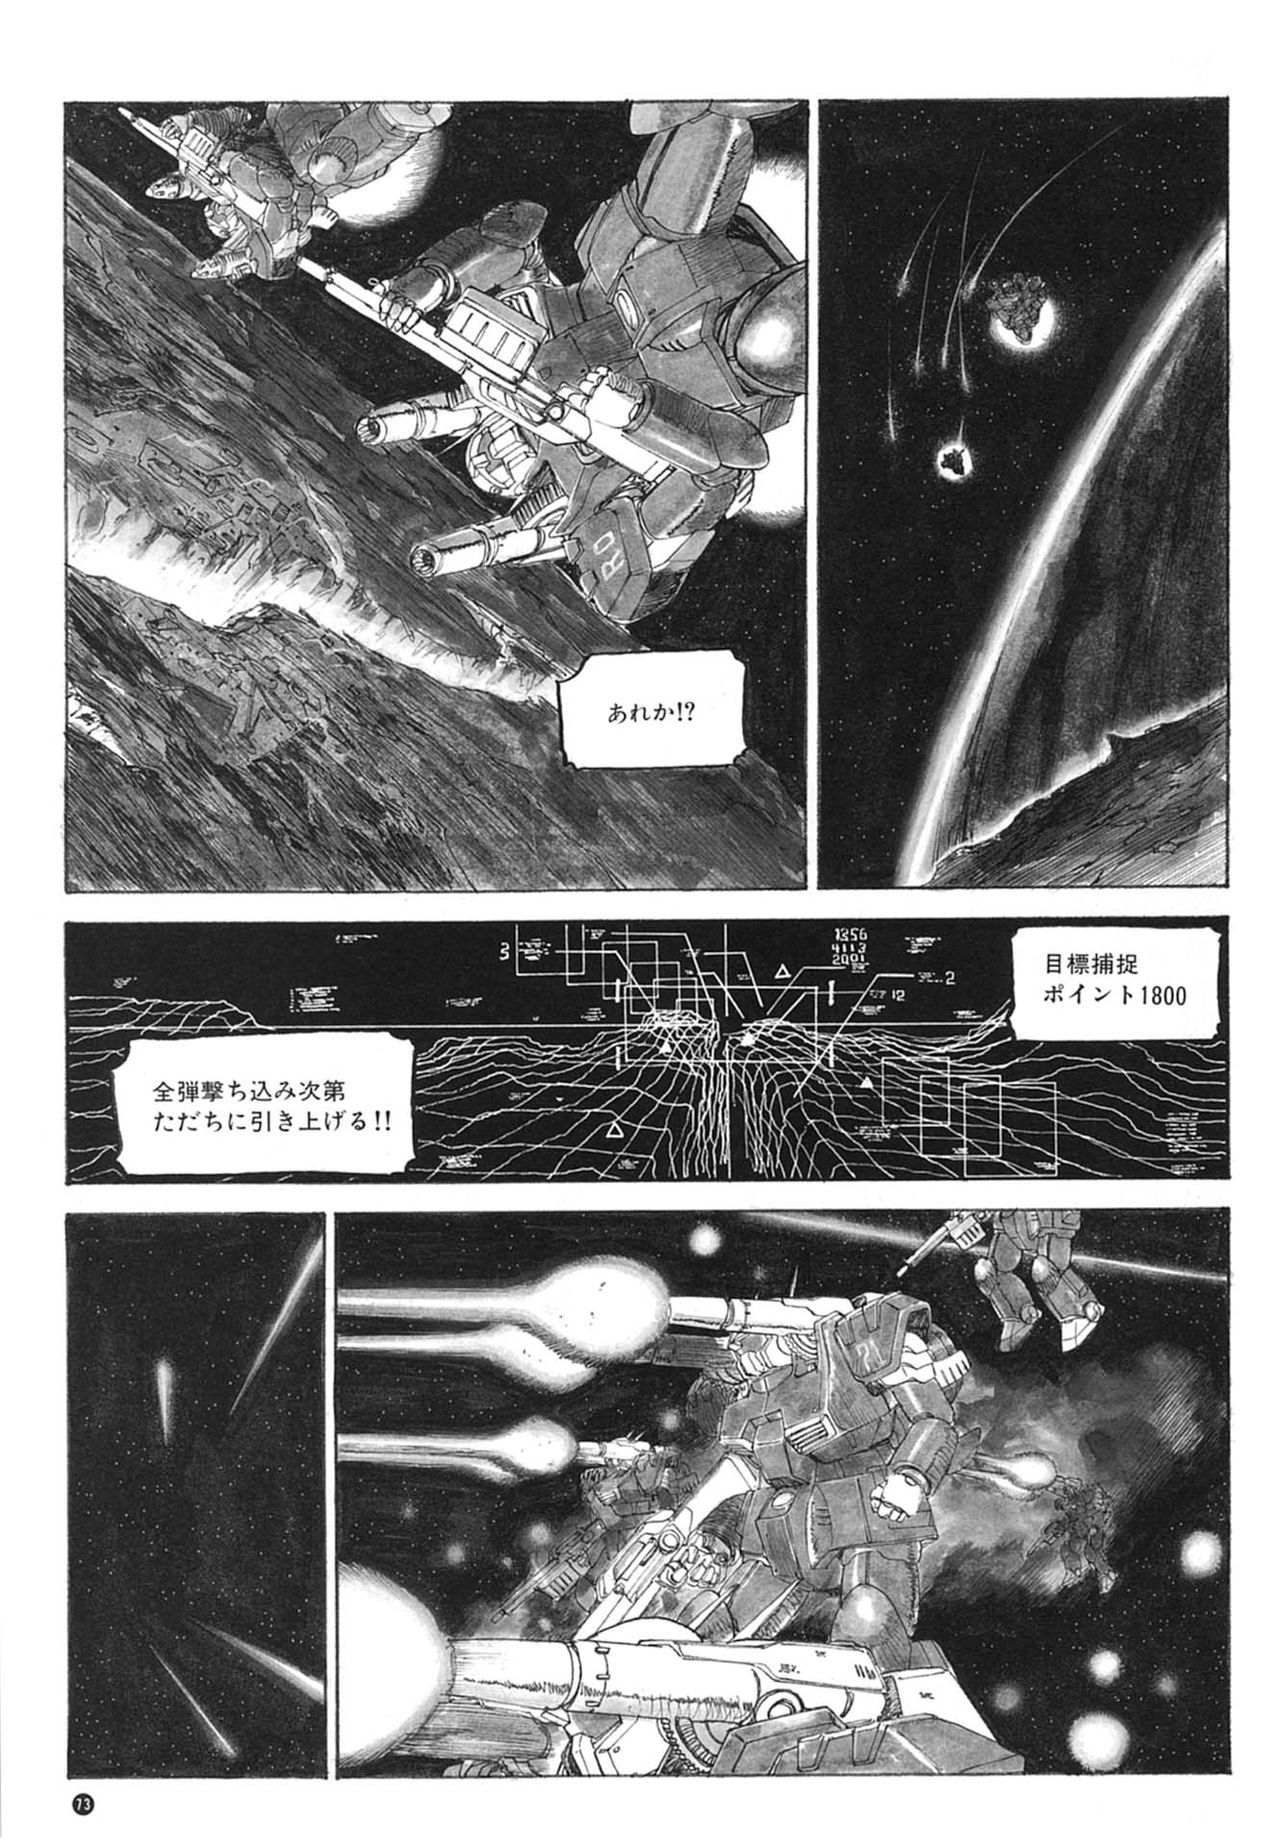 [Kazuhisa Kondo] Kazuhisa Kondo 2D & 3D Works - Go Ahead - From Mobile Suit Gundam to Original Mechanism 72